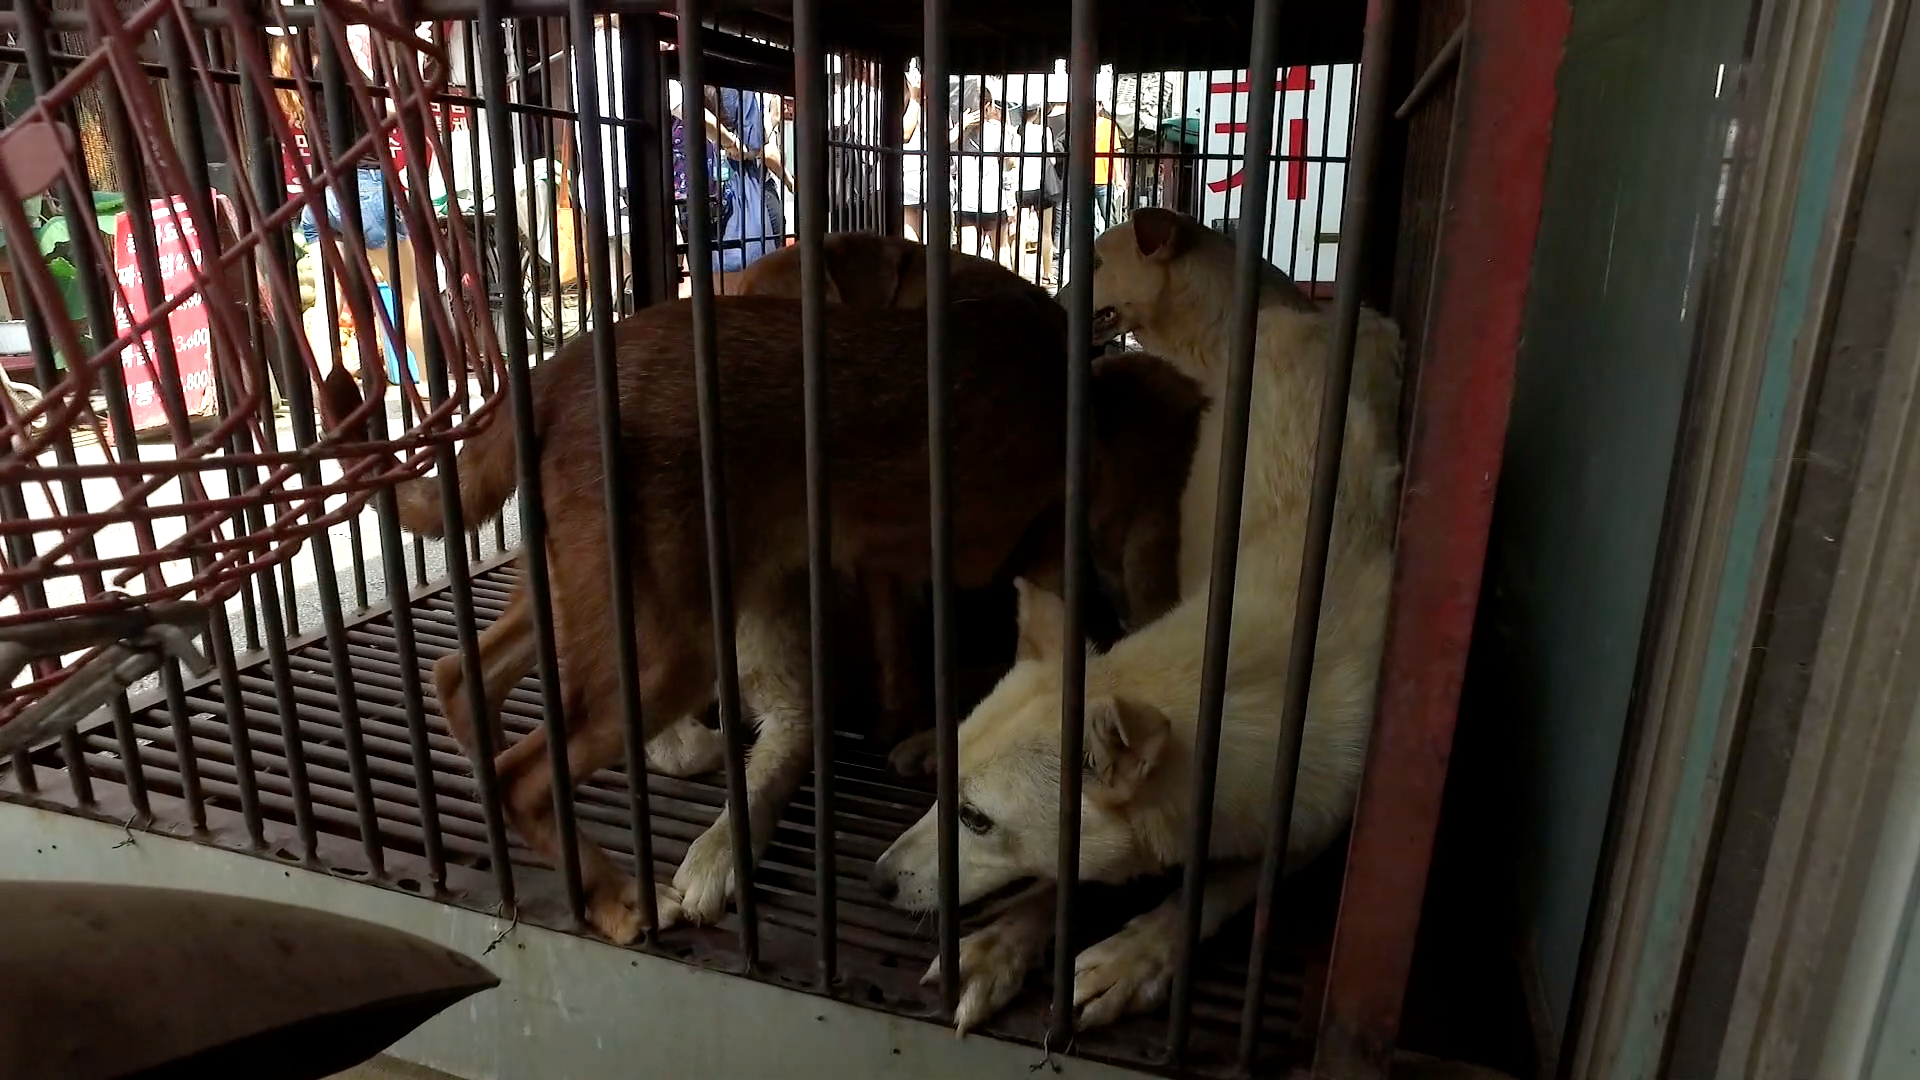 South Korea's Dog Meat Trade